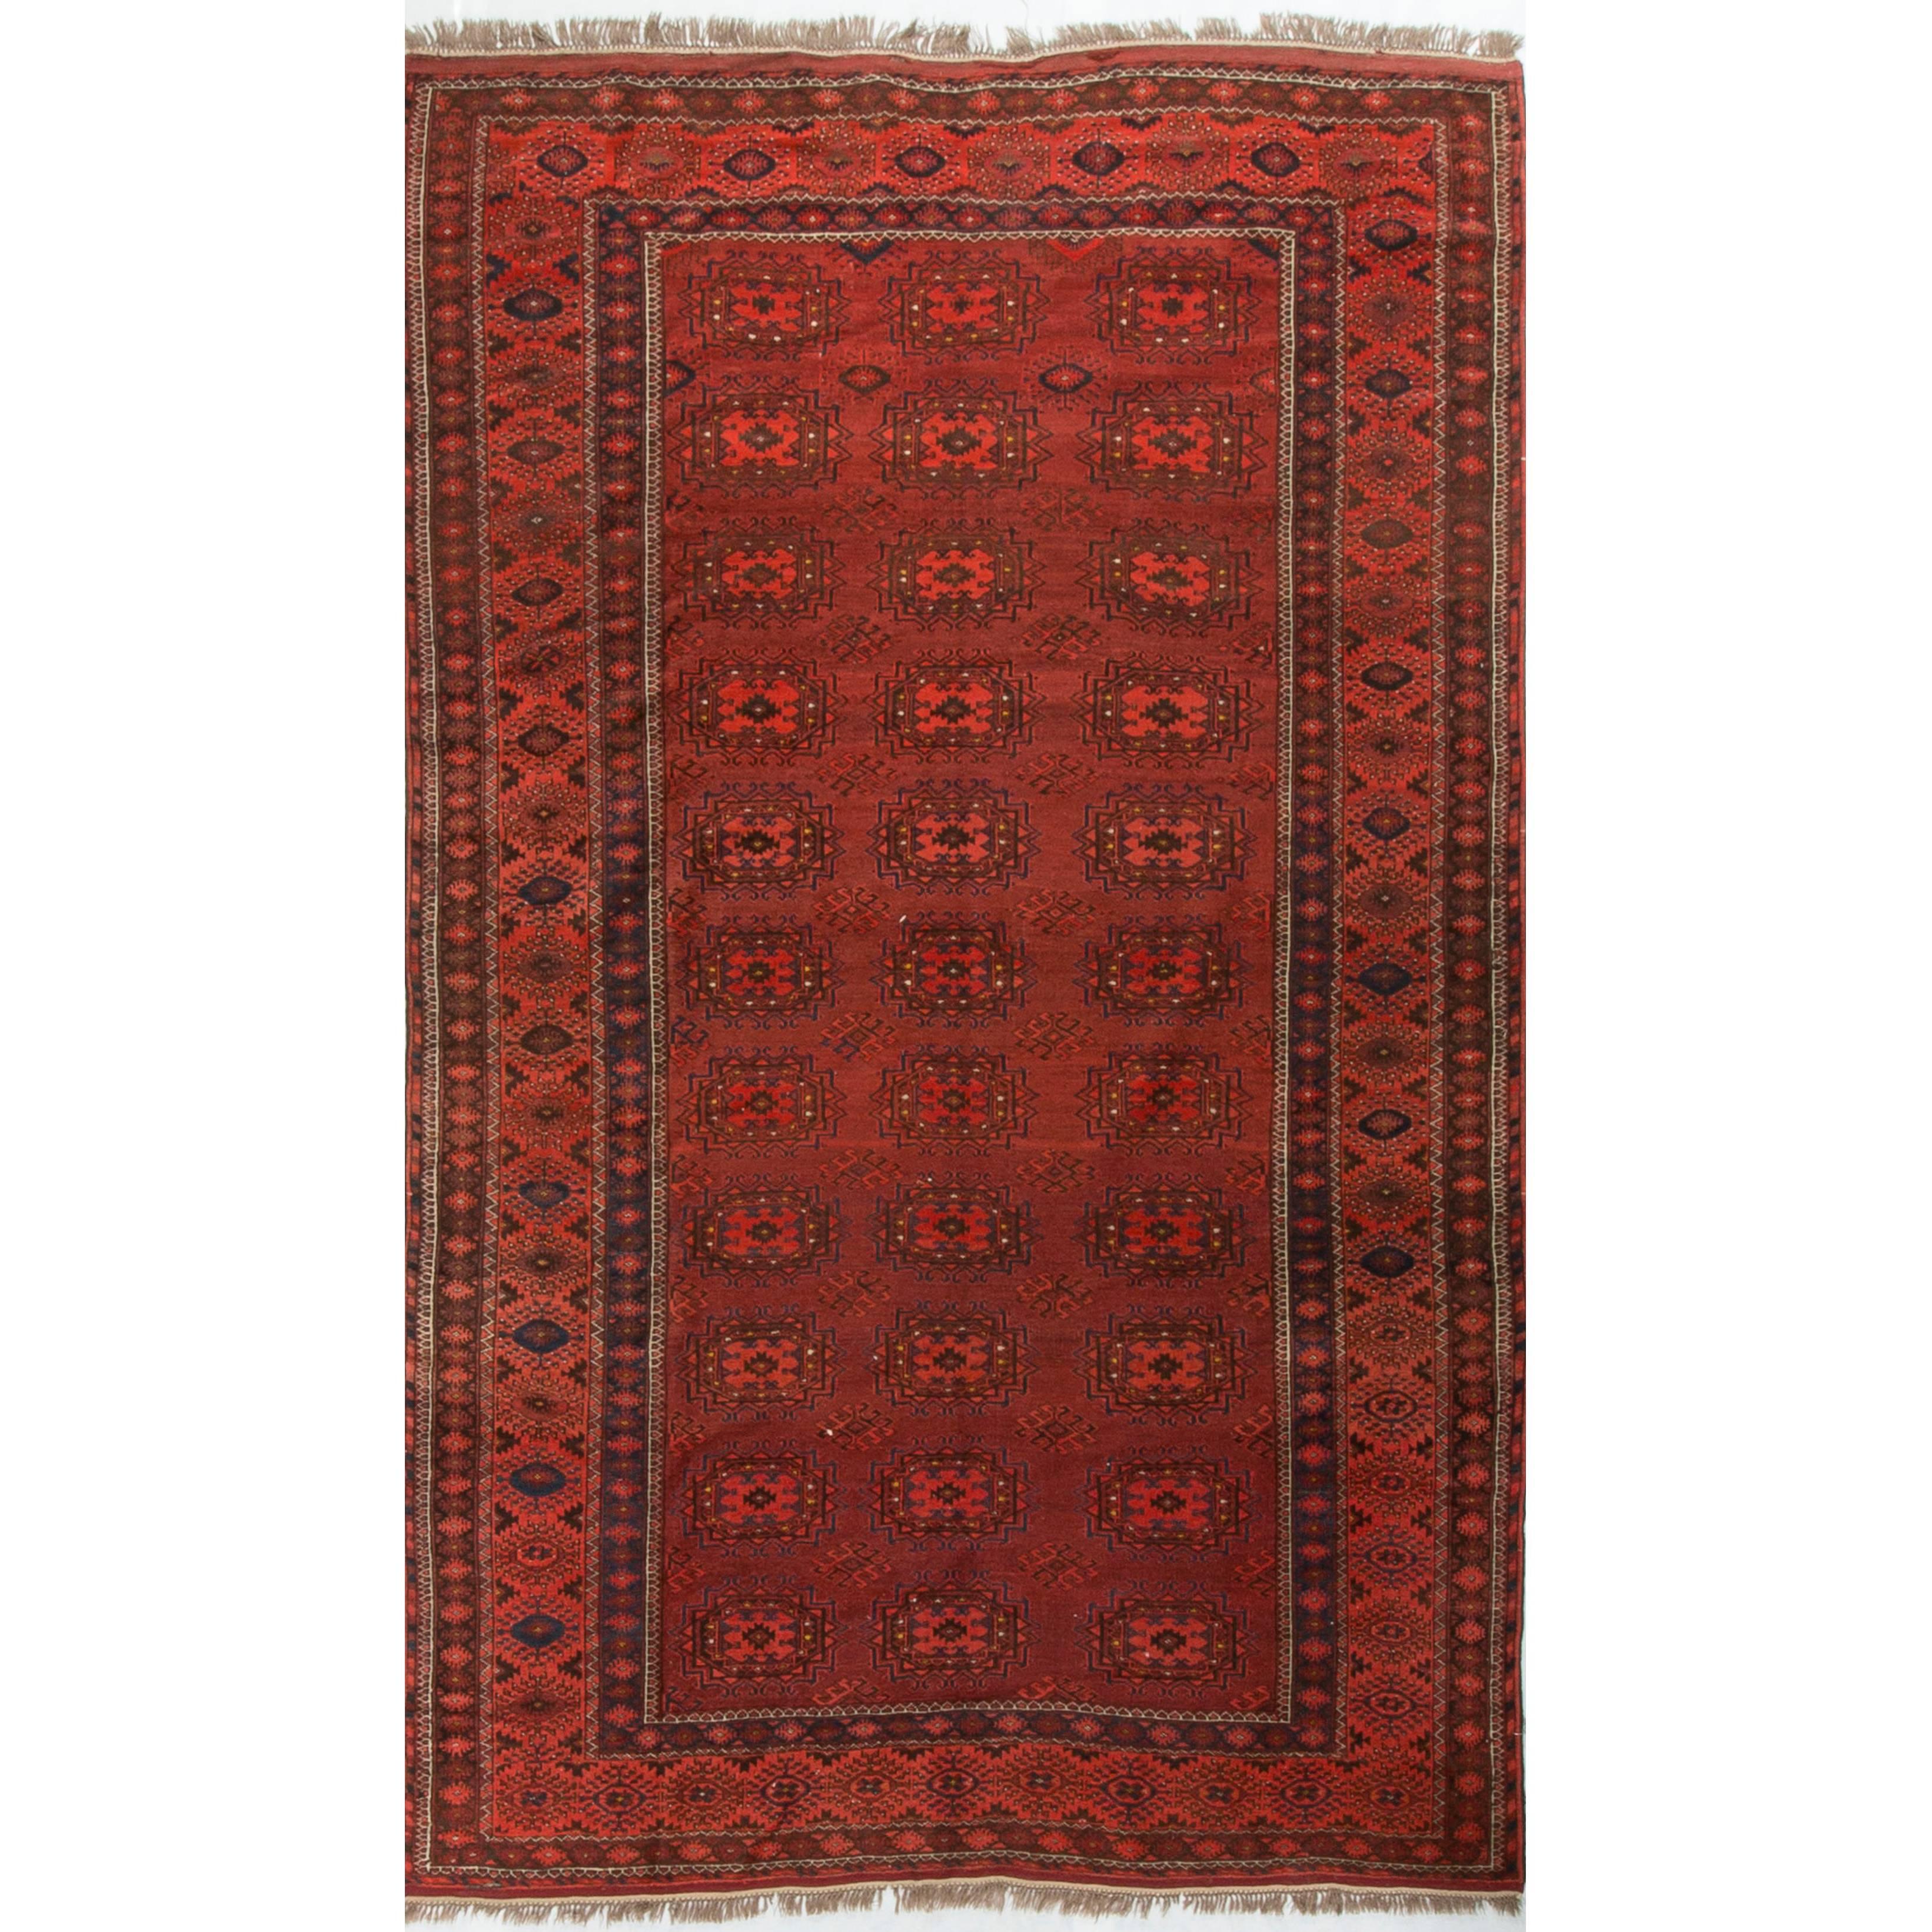 124 x 75 cm 4 x 2.4 Vintage Pakistani Rug,Bokhara Rug,Tekke Rug,Handmade Wool Rug,Area Rug,Pakistani Traditional Rug,Hand Knotted Wool Rug